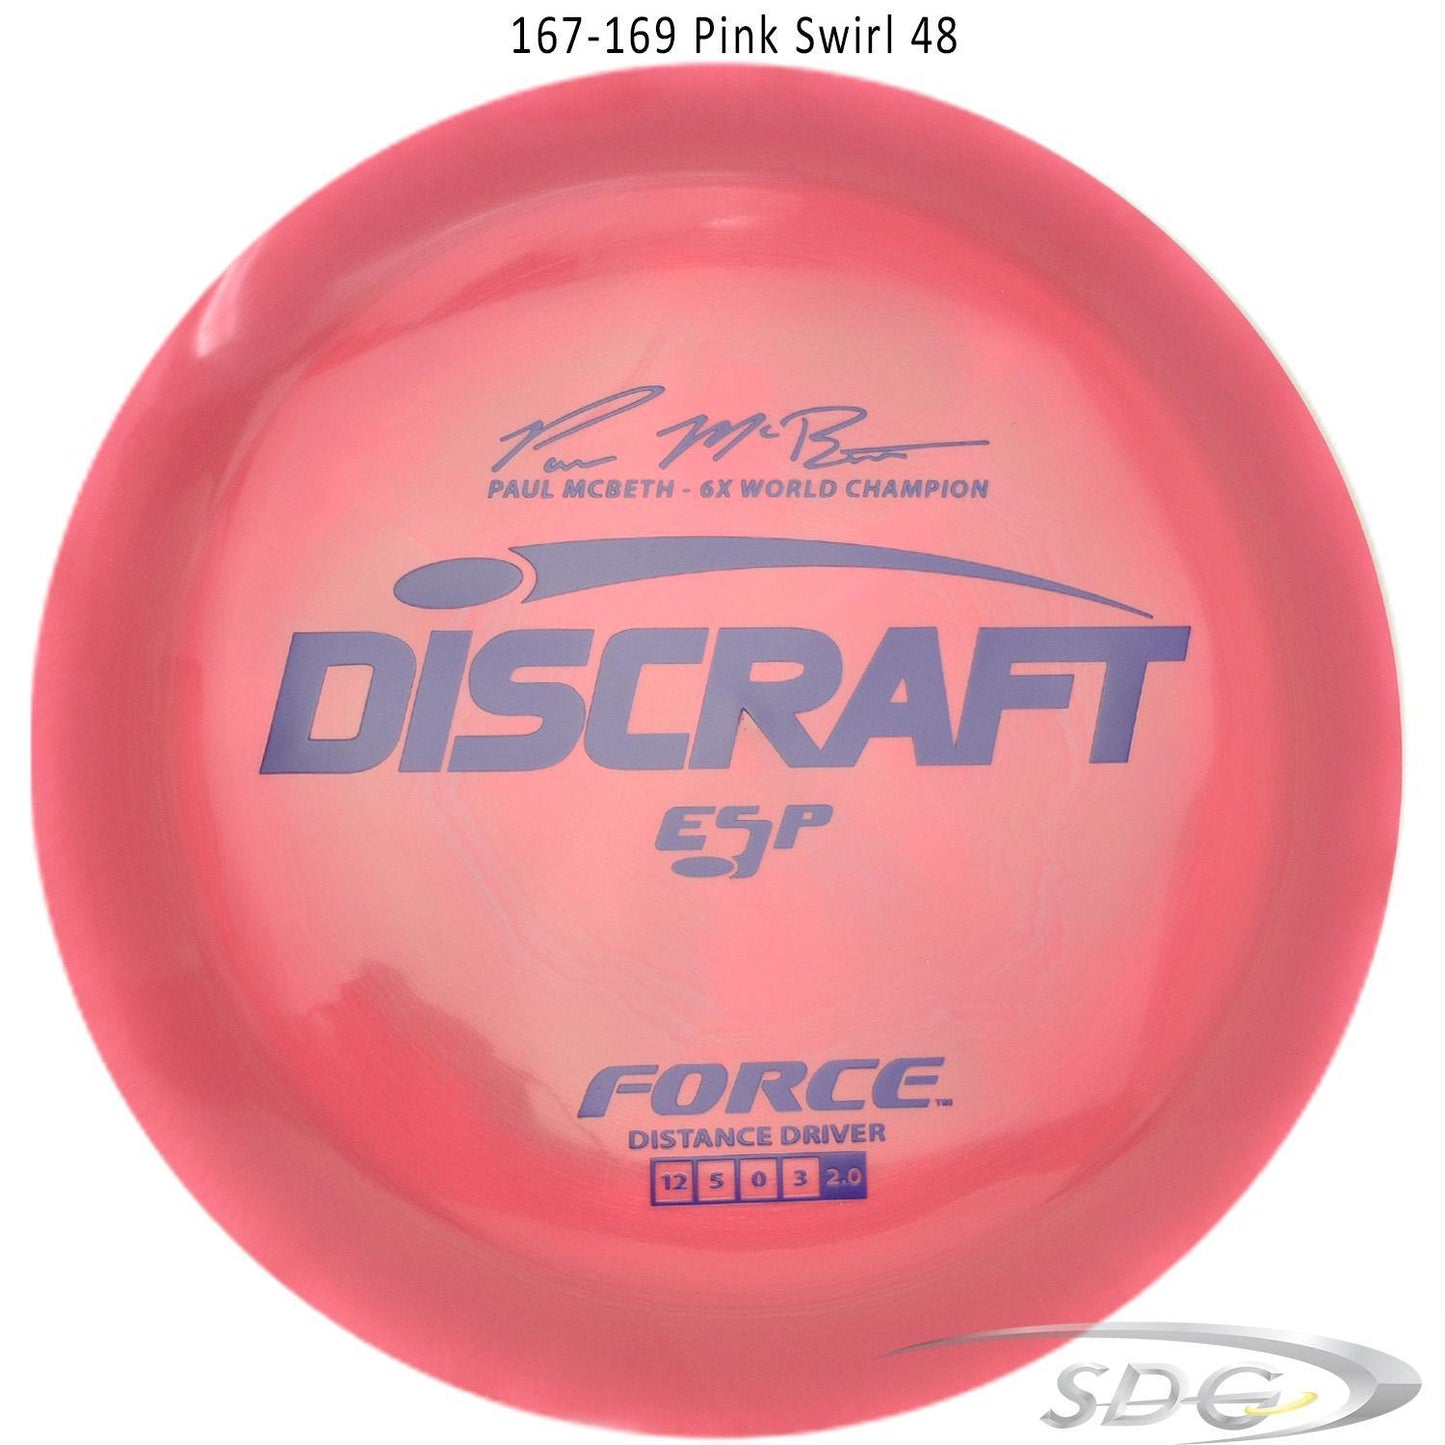 discraft-esp-force-6x-paul-mcbeth-signature-disc-golf-distance-driver 167-169 Pink Swirl 48